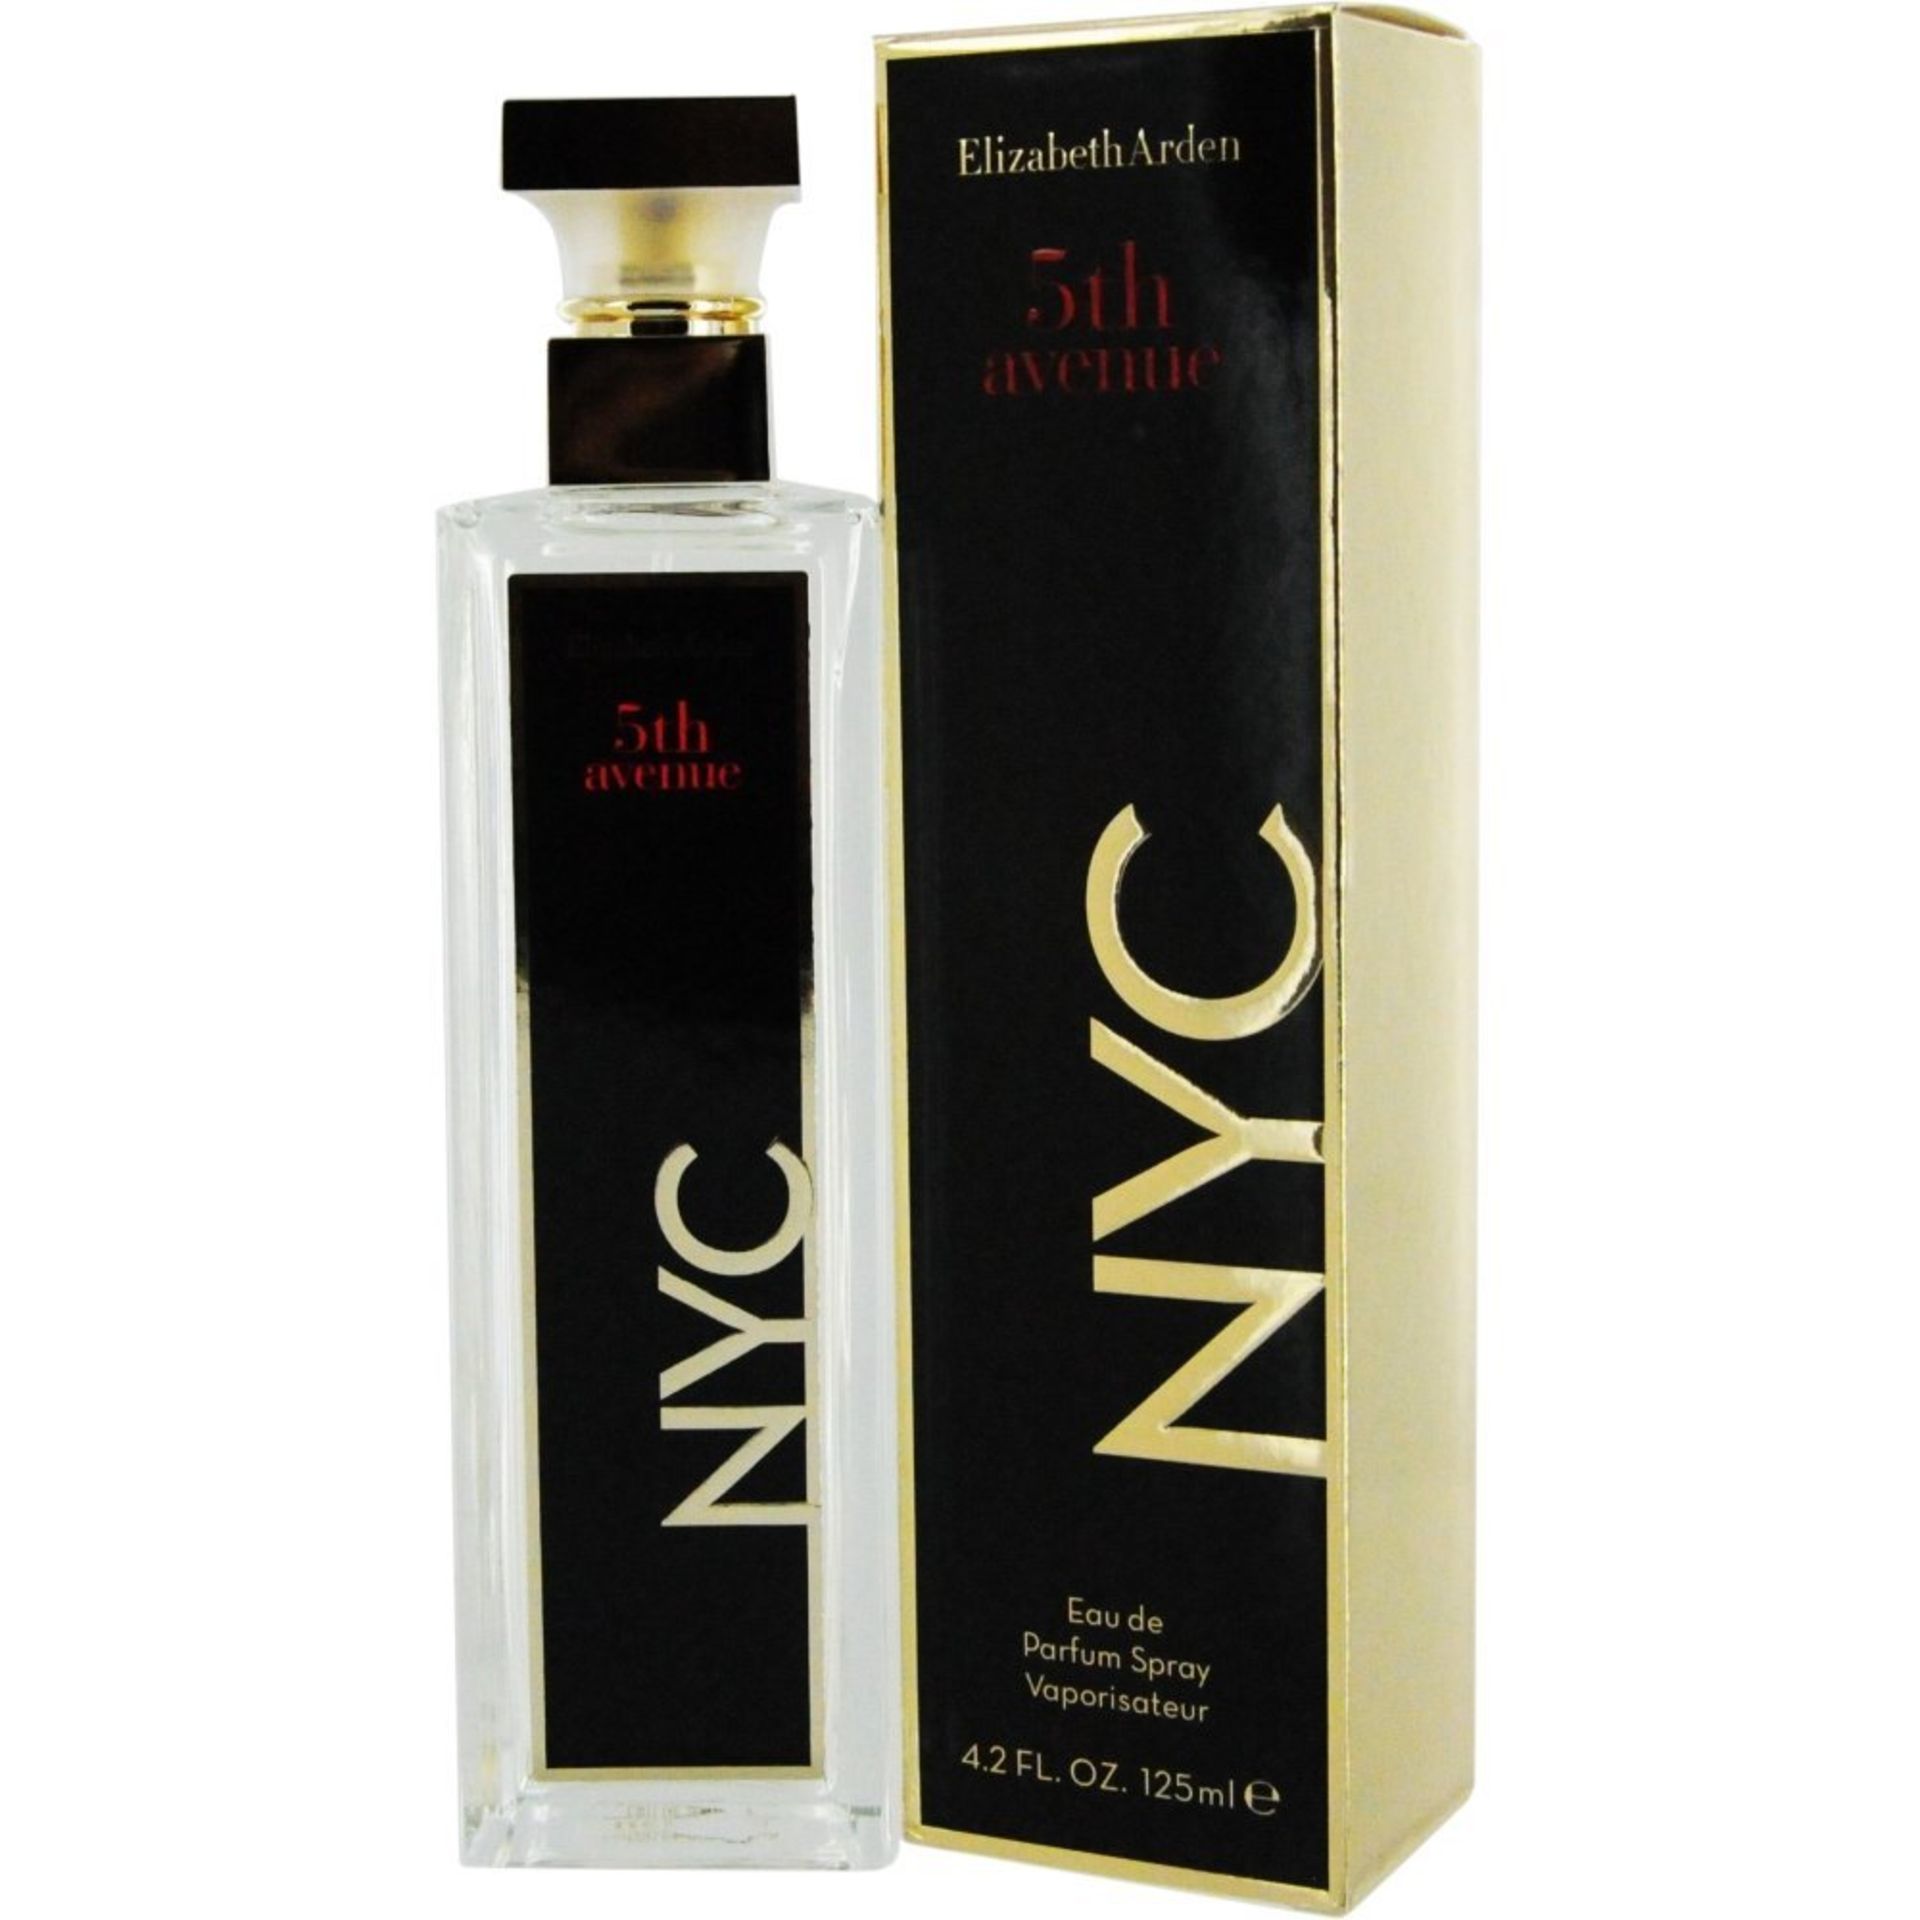 V Brand New Elizabeth Arden 5th Avenue NYC - Eau De Parfum 125ml ISP £55.00